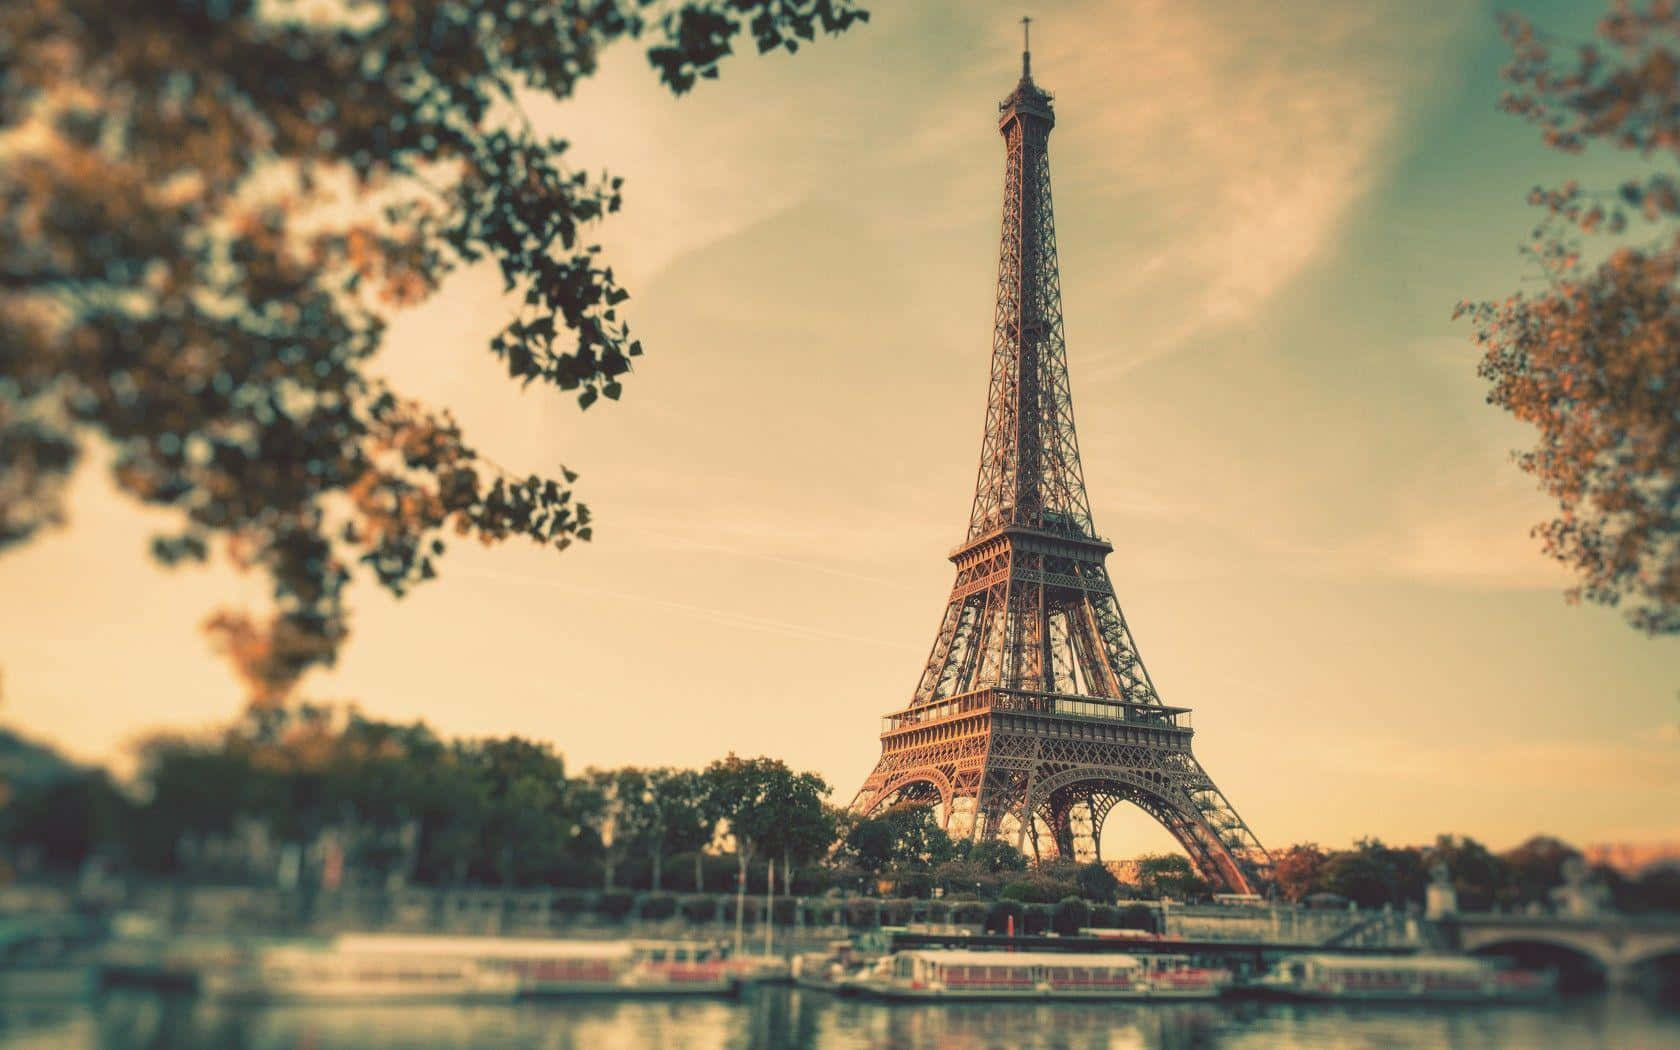 1000 Eiffel Tower Paris France Pictures  Download Free Images on  Unsplash